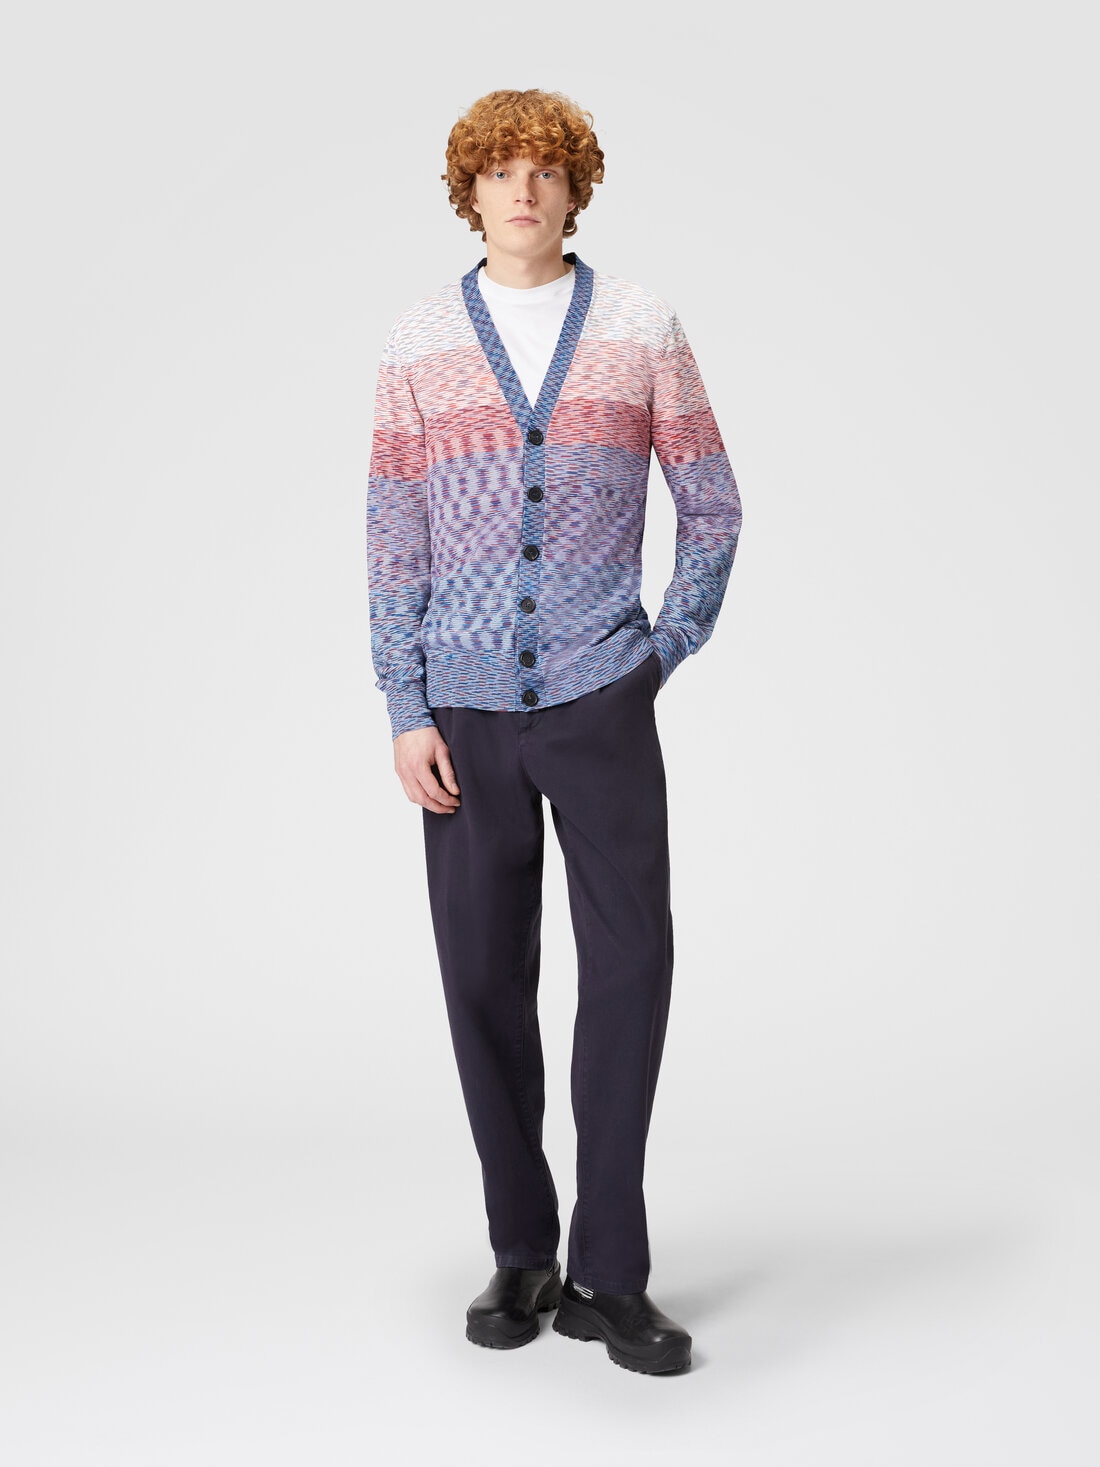 Cardigan in dégradé slub cotton knit, Multicoloured  - US24SM0CBK012QS415E - 1